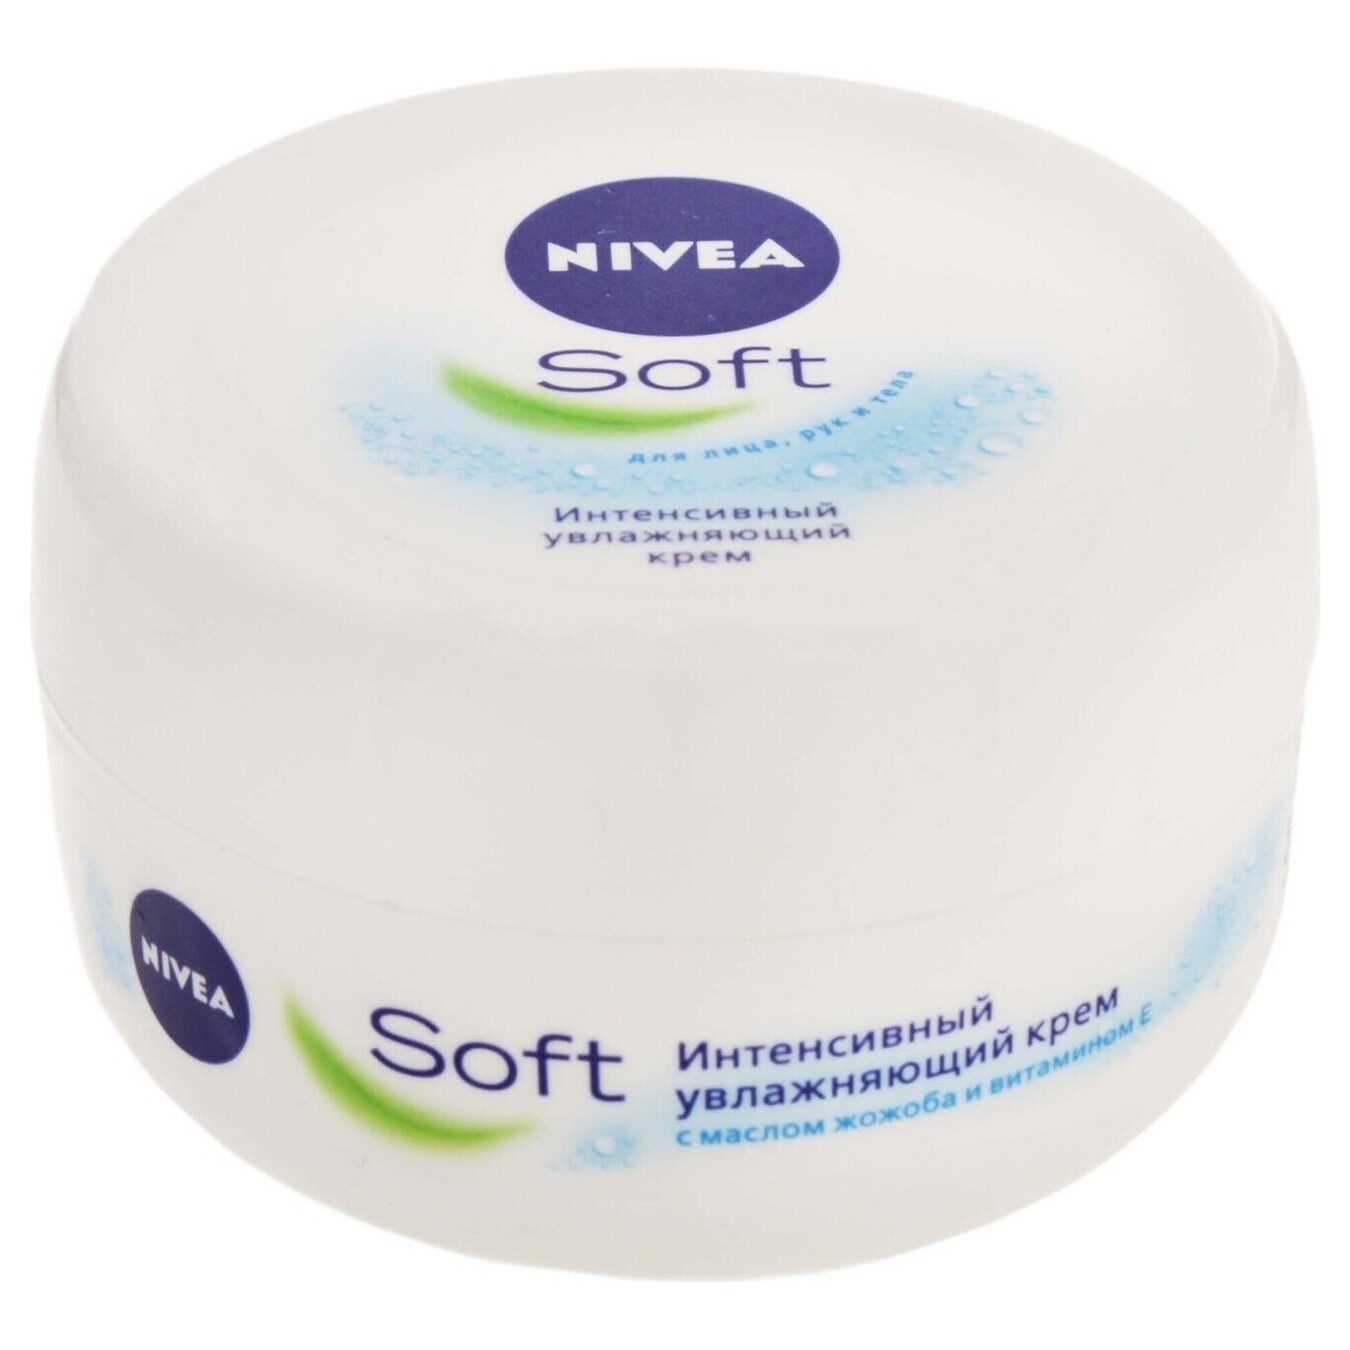 Nivea Soft Wear Intensive body cream with Jojoba Oil 100ml 2